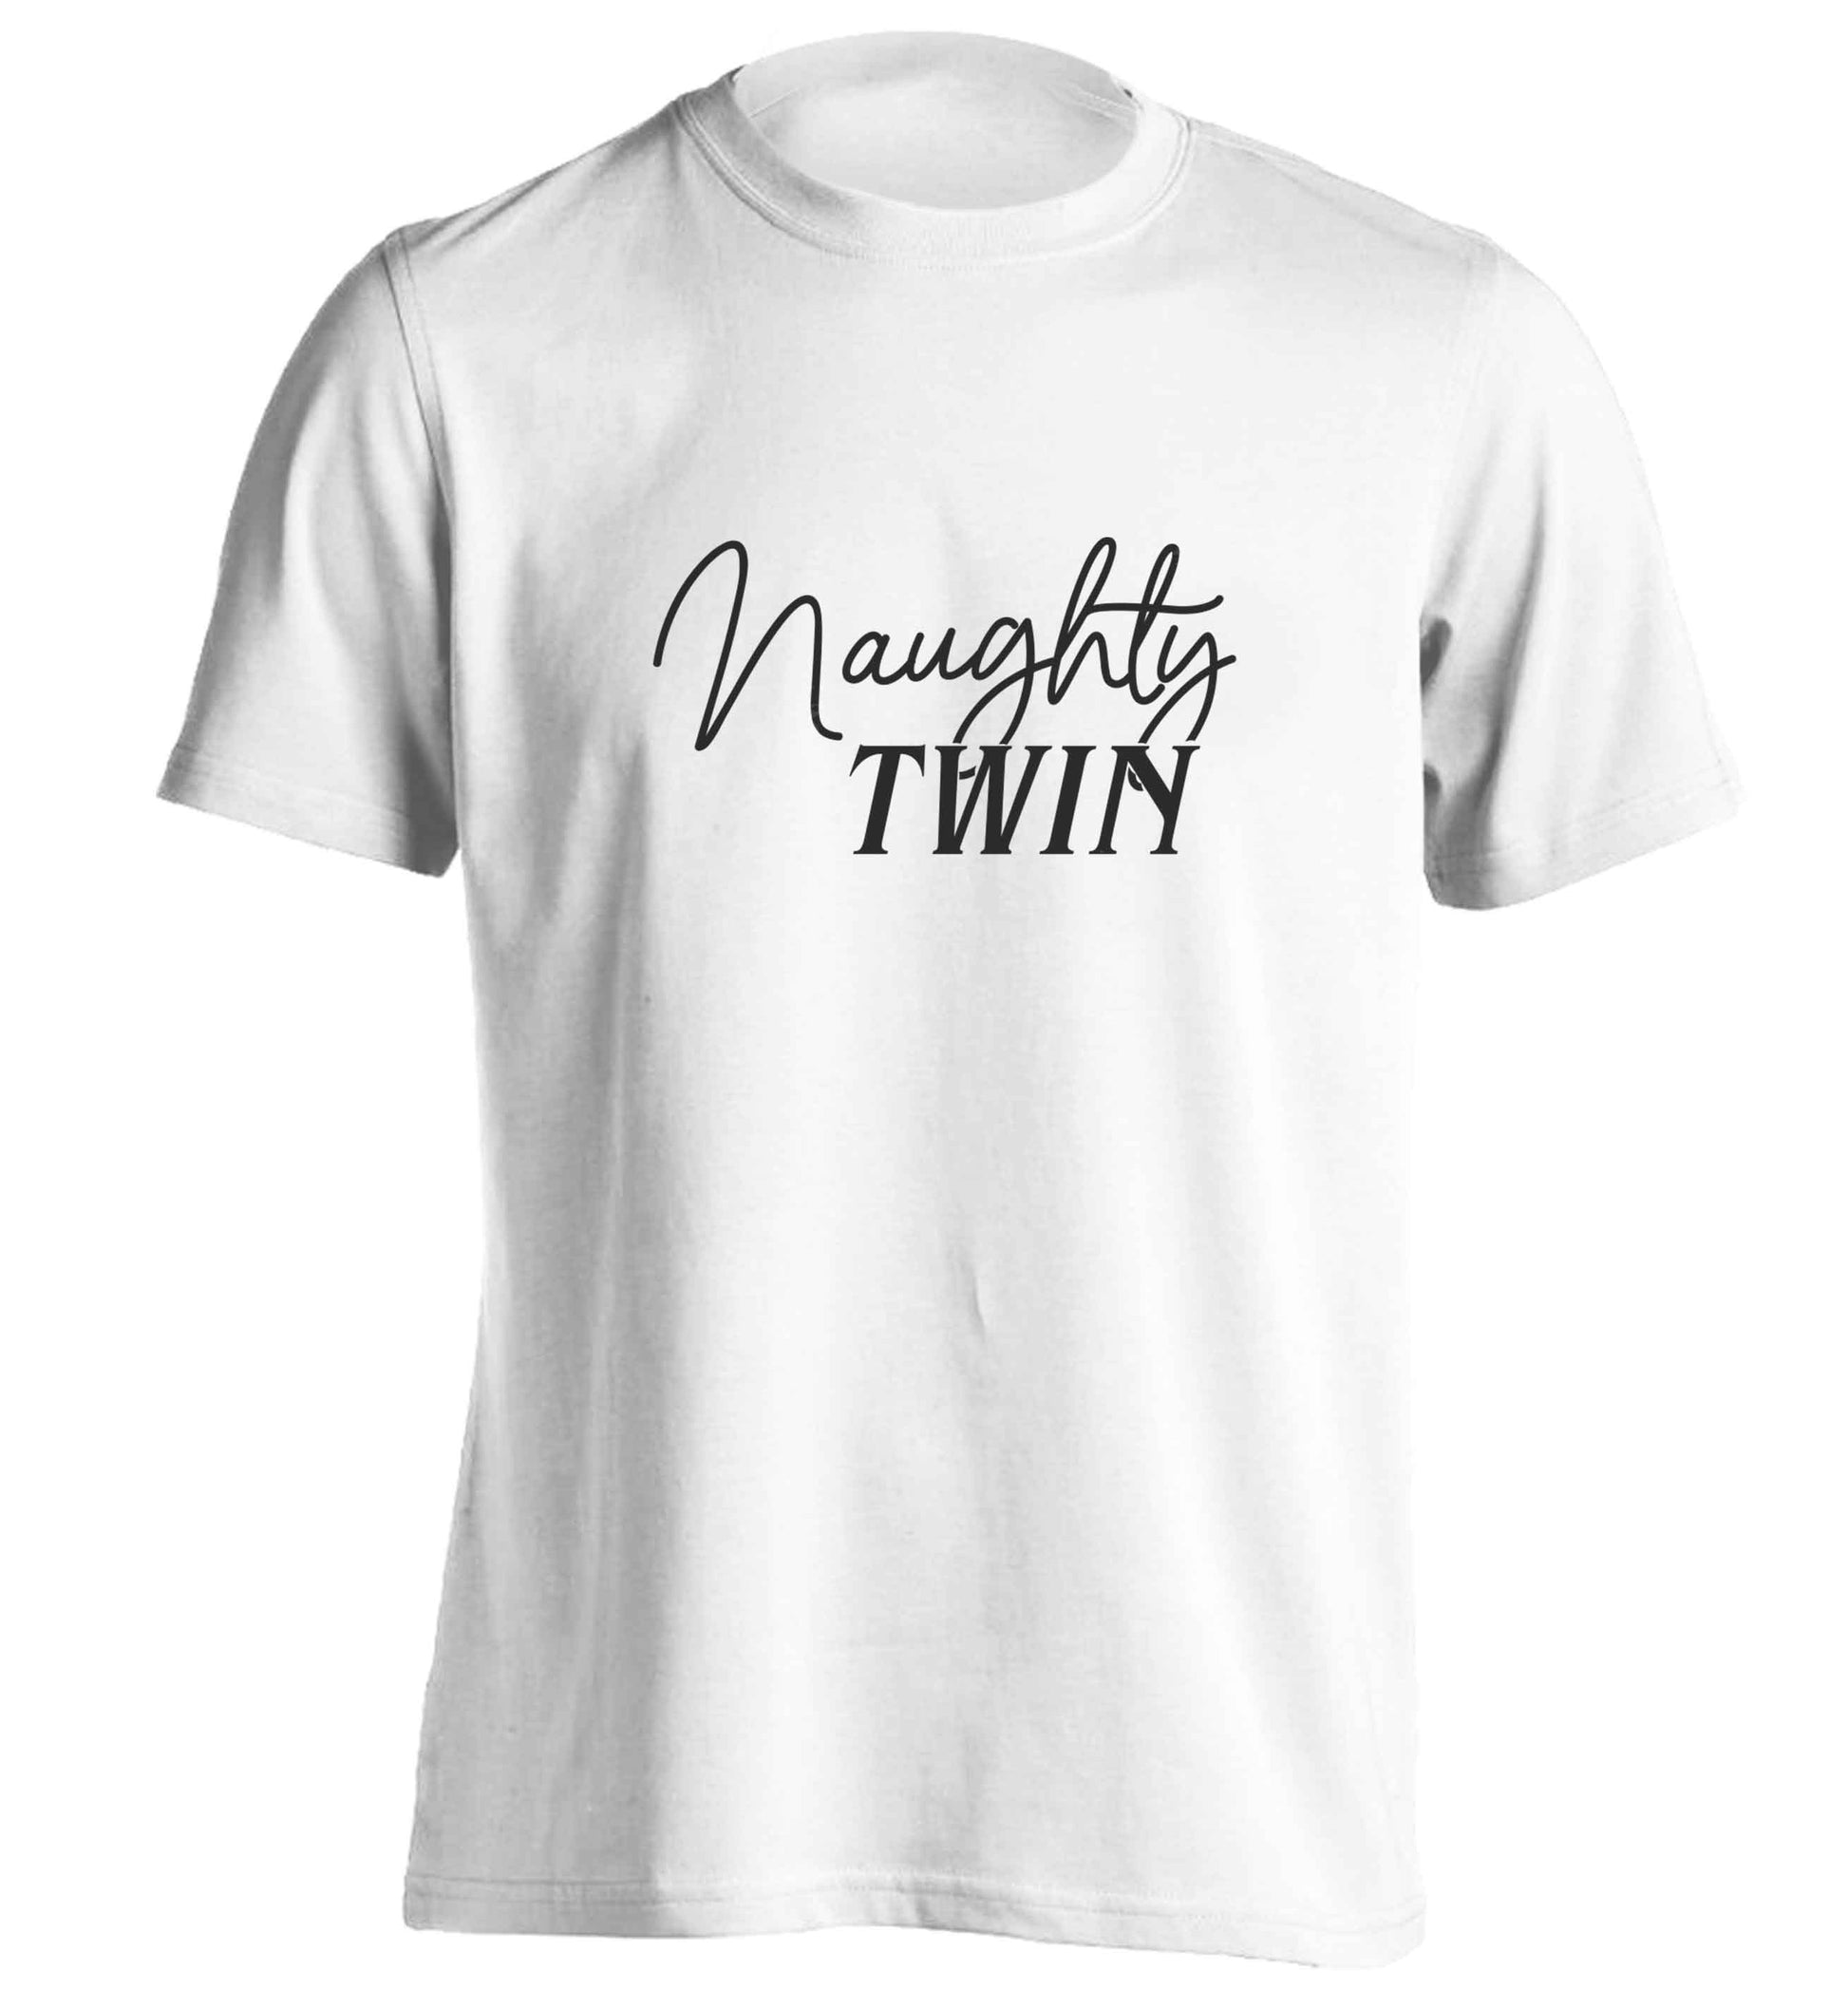 Naughty twin adults unisex white Tshirt 2XL